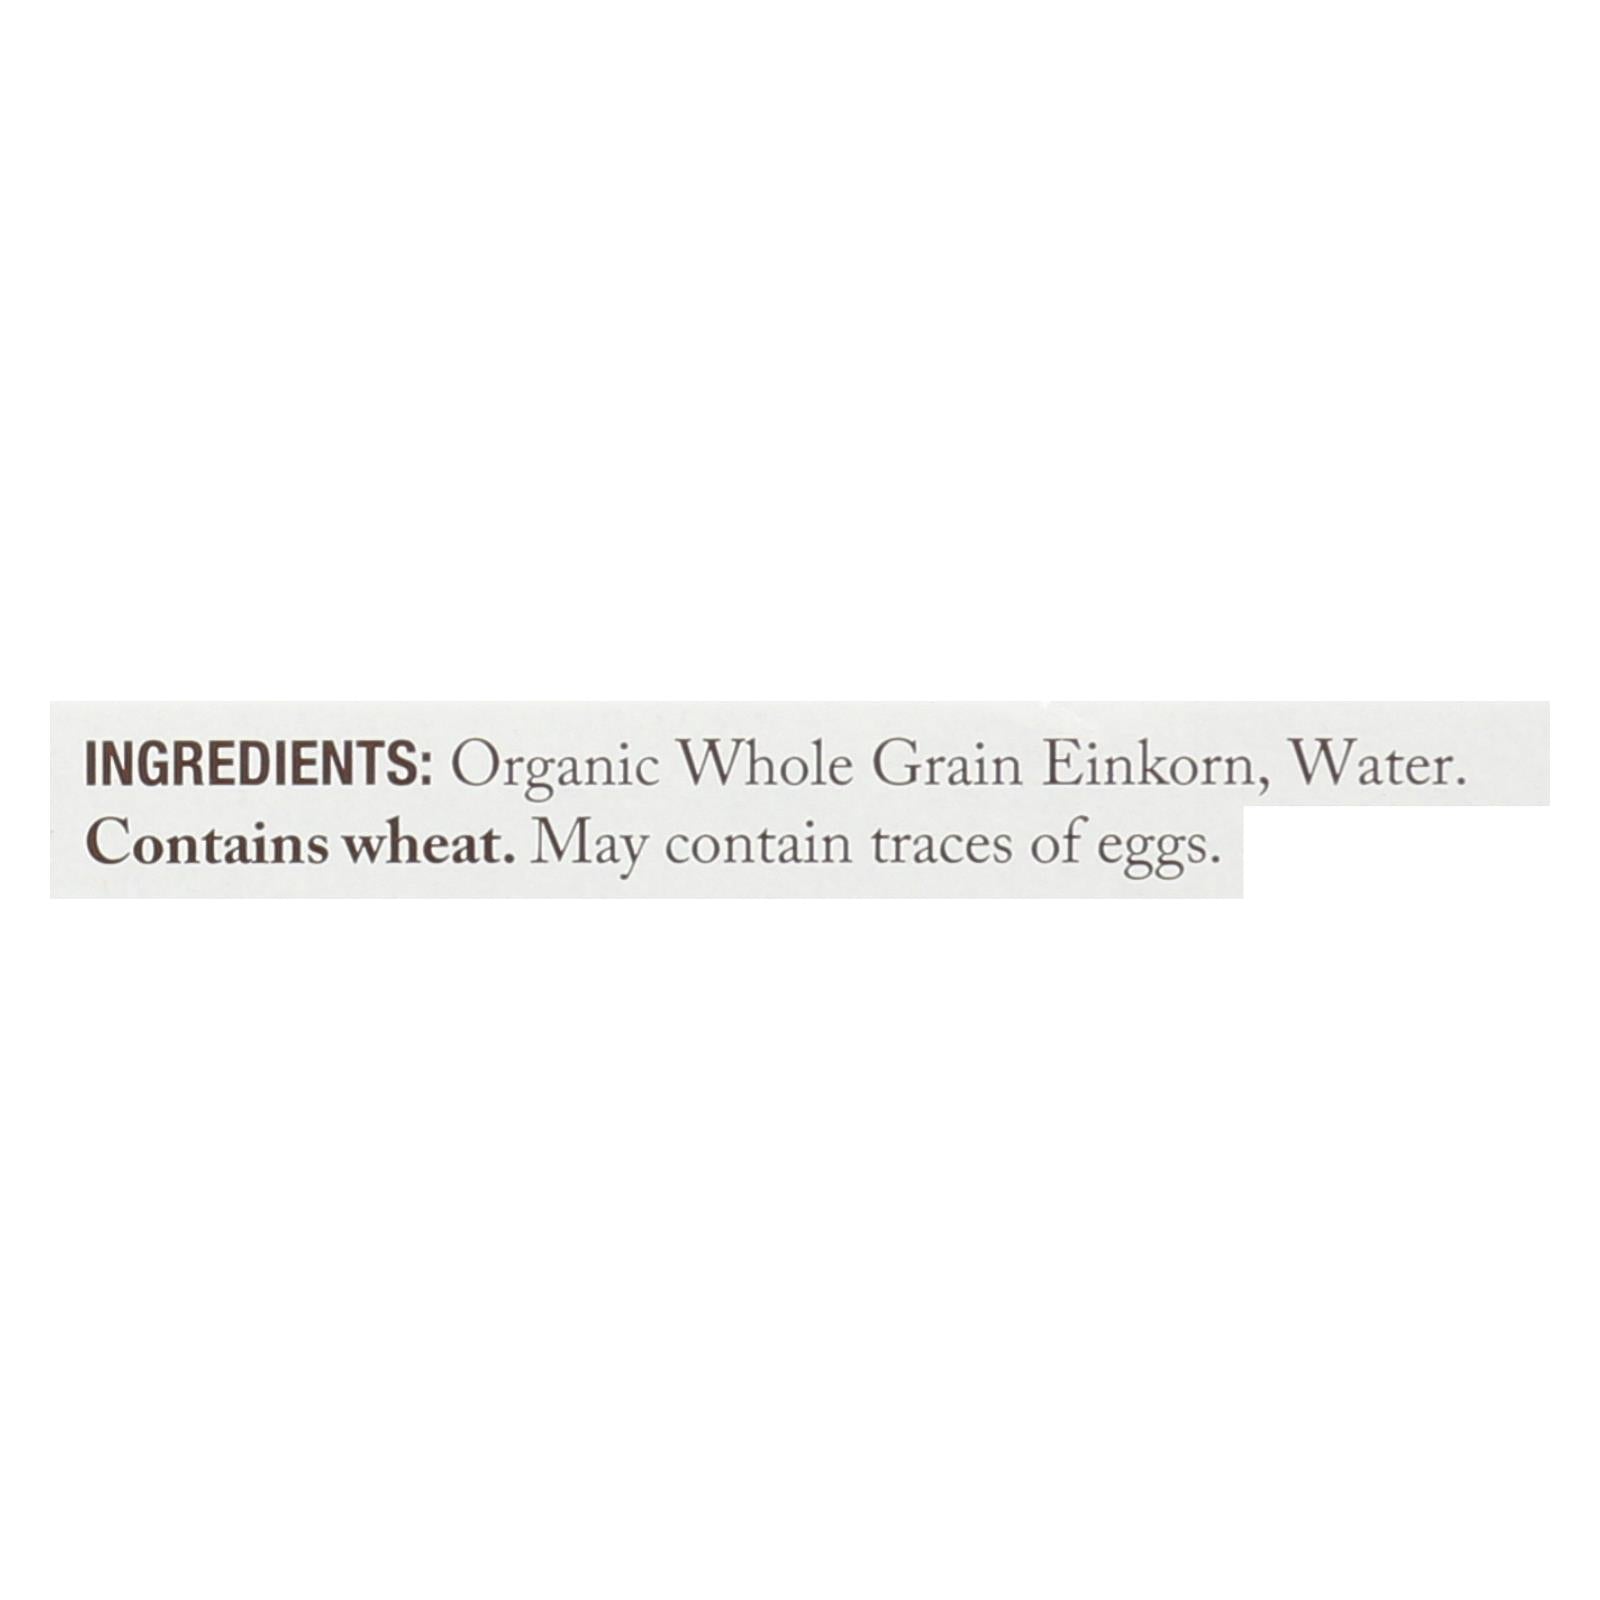 Jovial - Whole Wheat Einkorn Pasta - Linguine - Case Of 12 - 12 Oz.